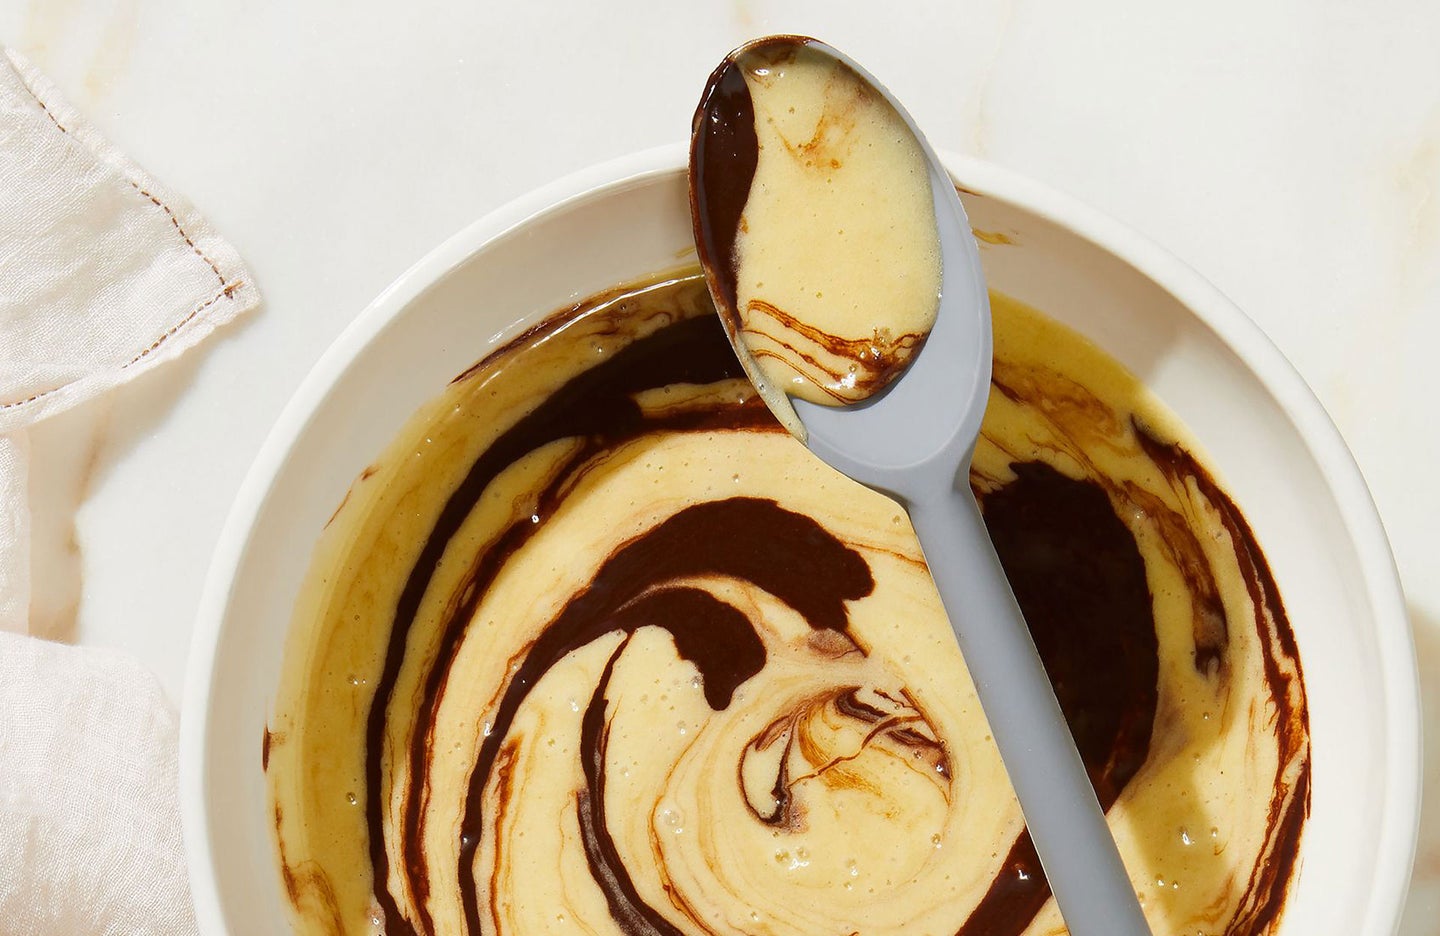 Vanilla and chocolate cake batter swirled together